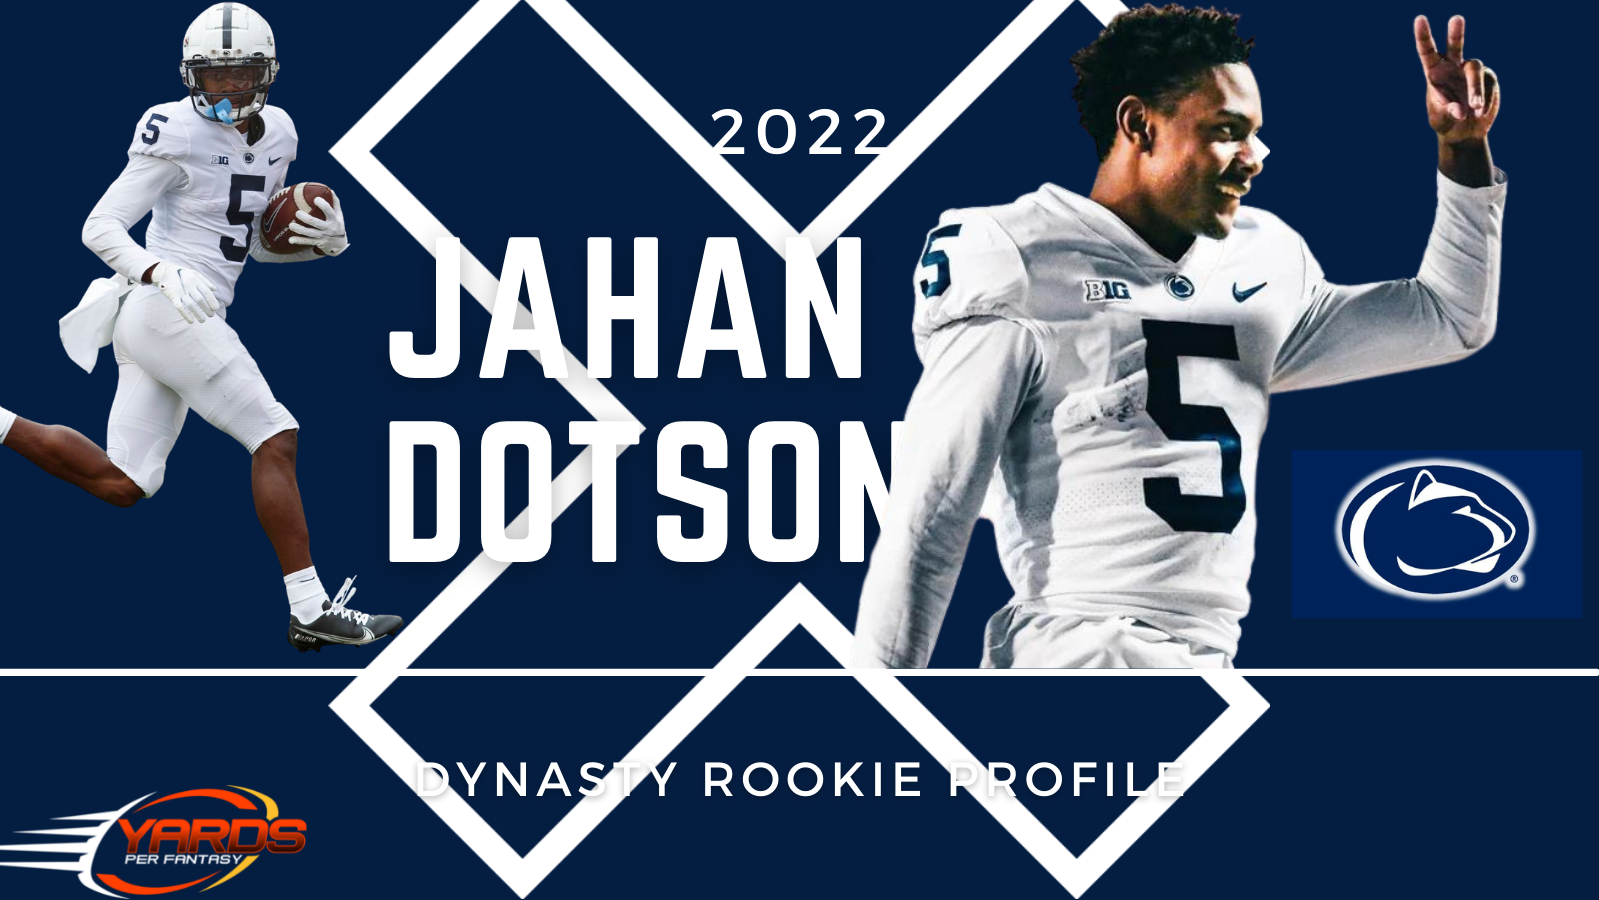 Jahan Dotson 2022 Dynasty Rookie Profile Yards Per Fantasy